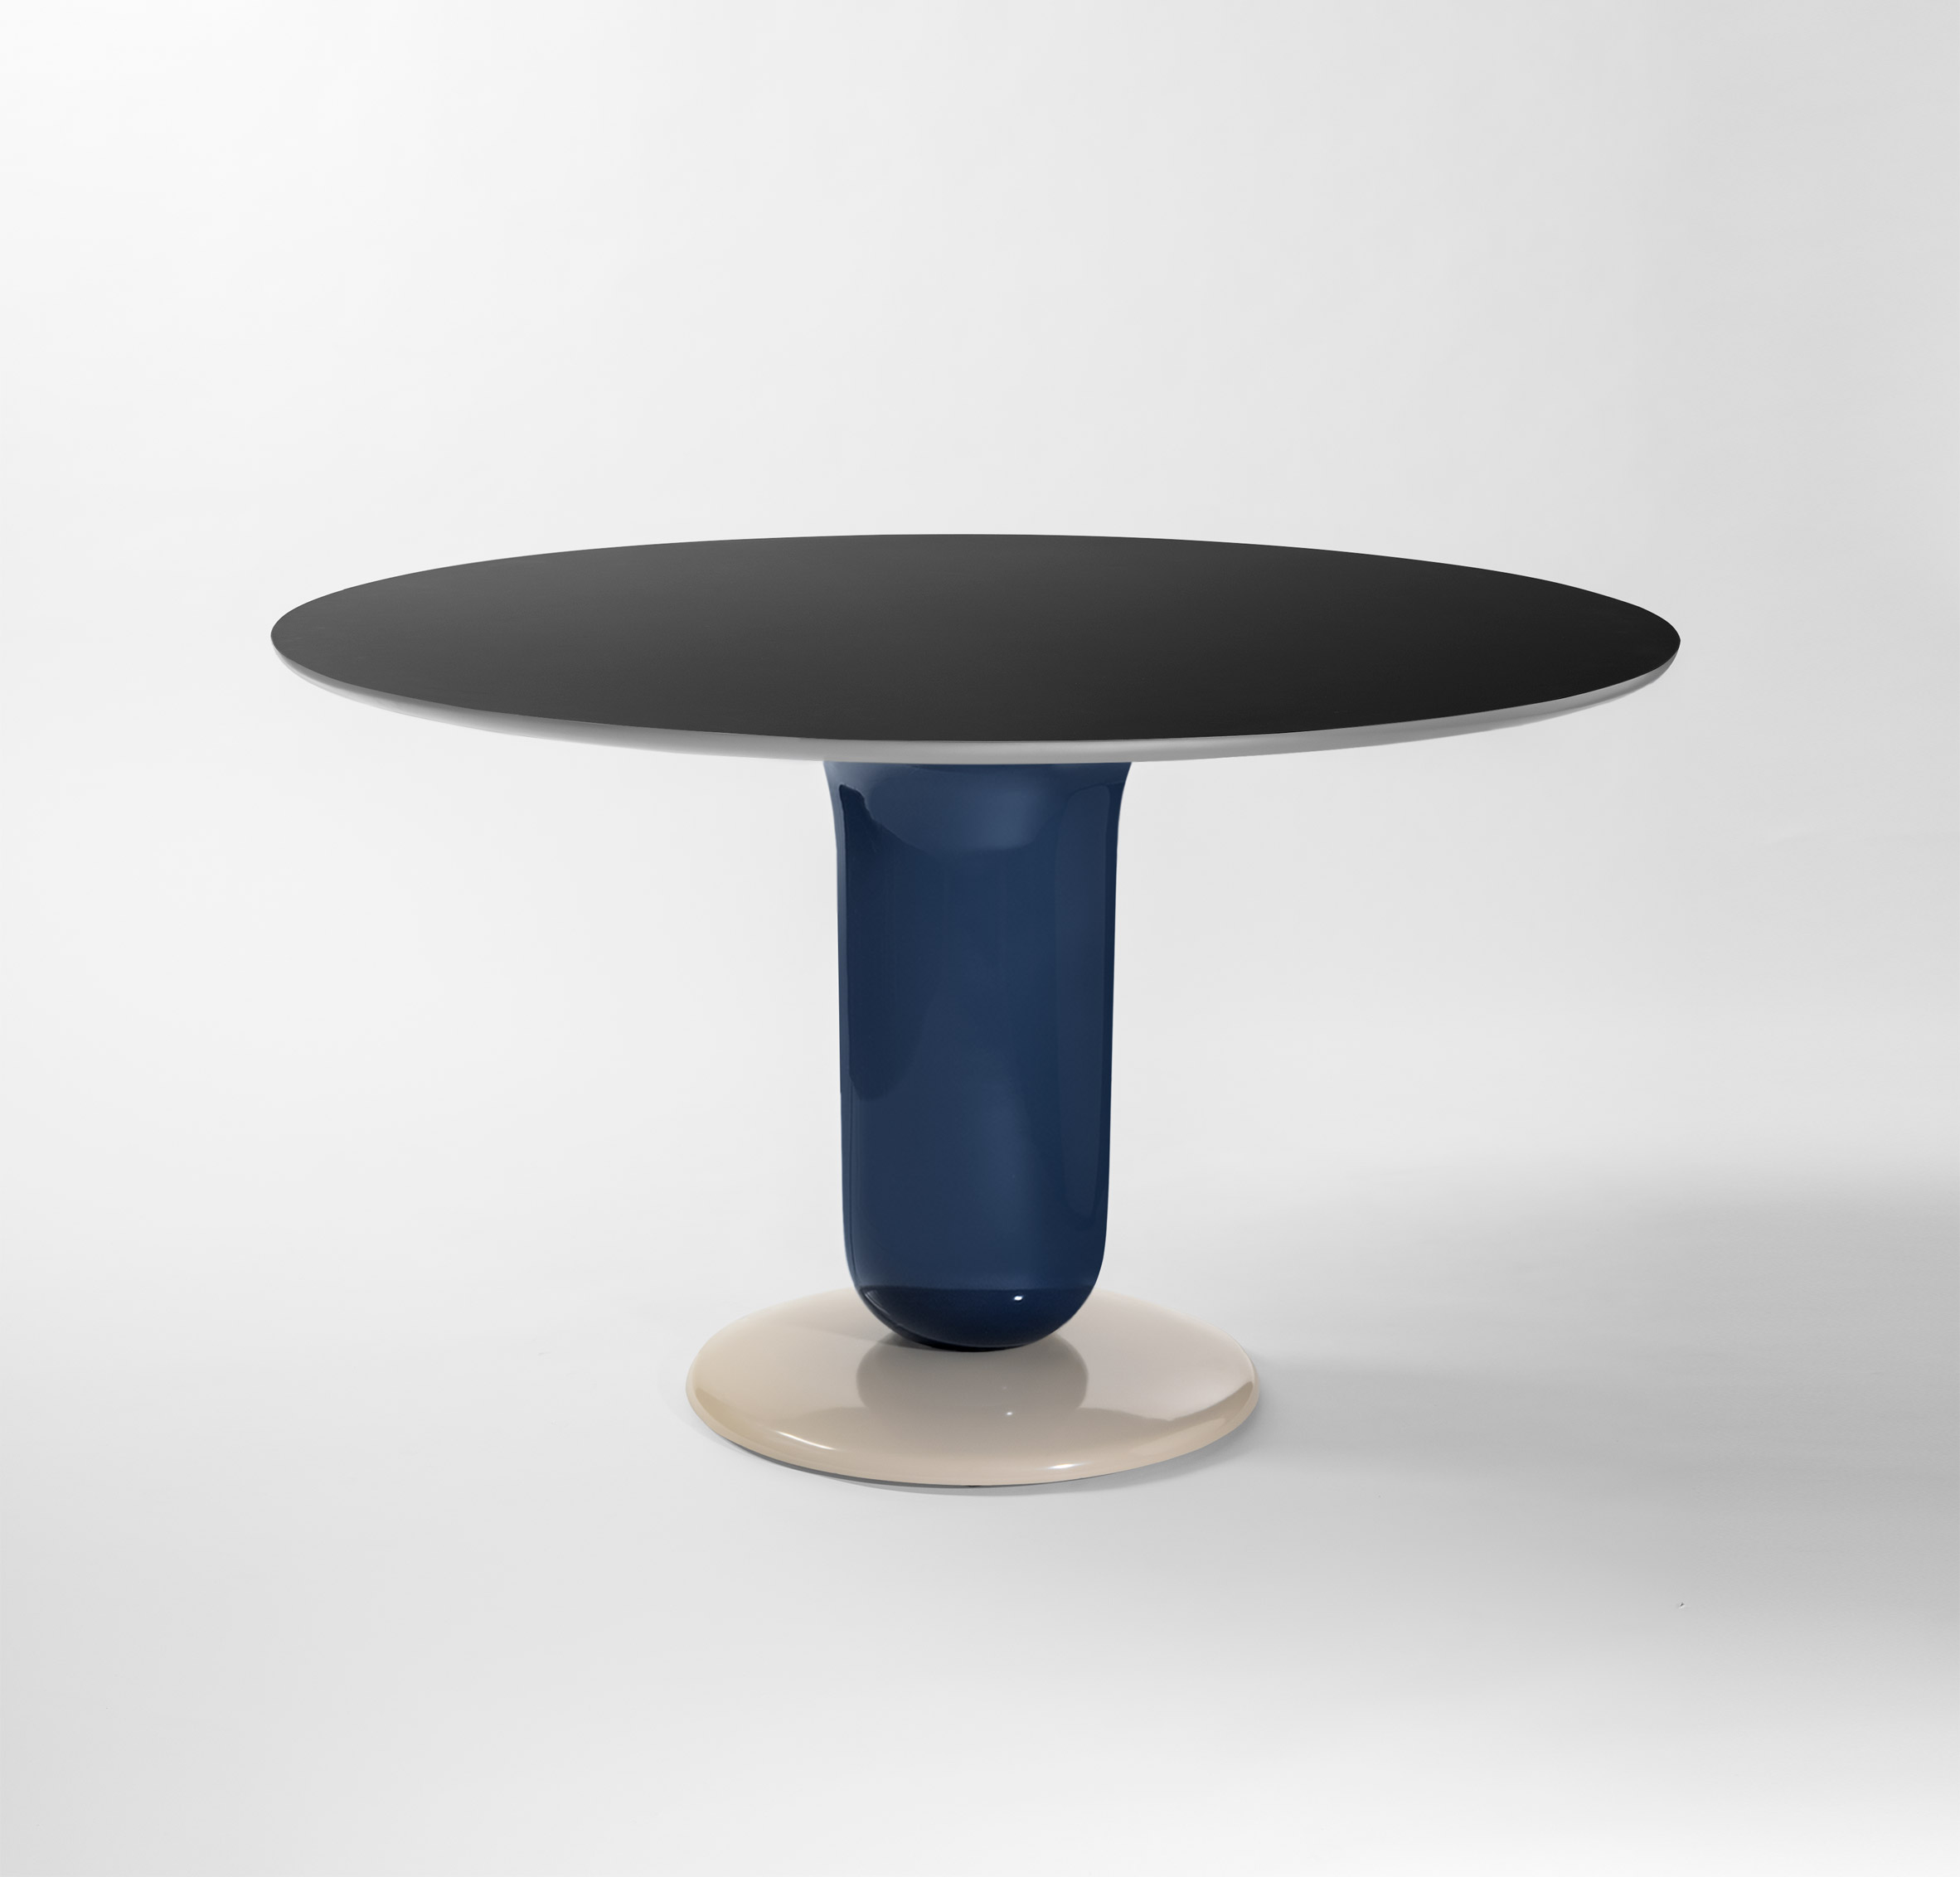 A pedestal dining table with a circular top